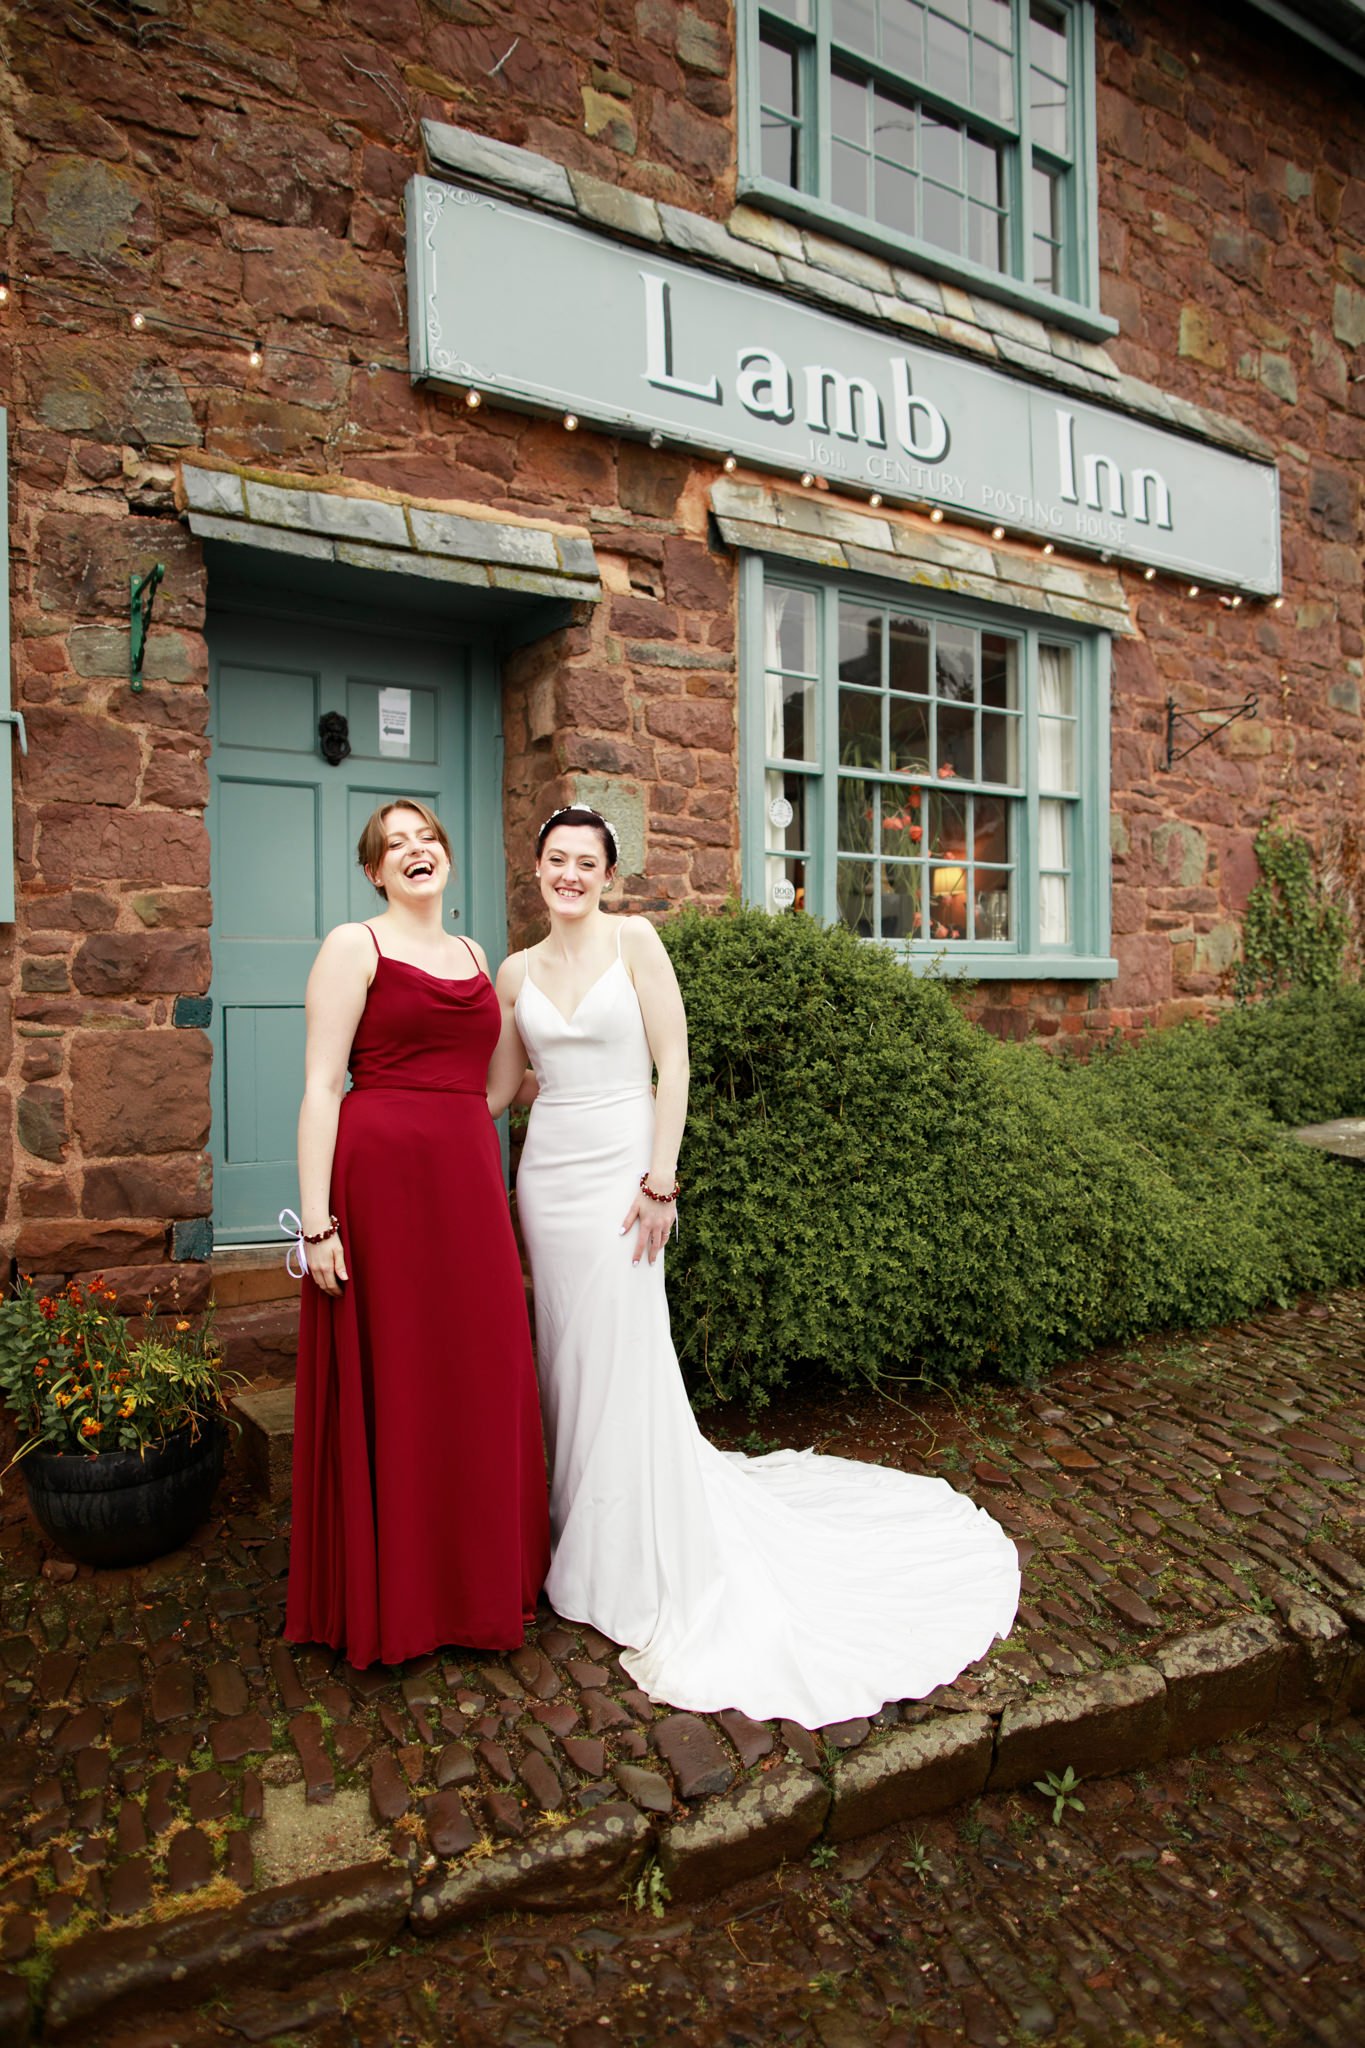 The Lamb Inn Sandford Wedding Photographer - 036.jpg